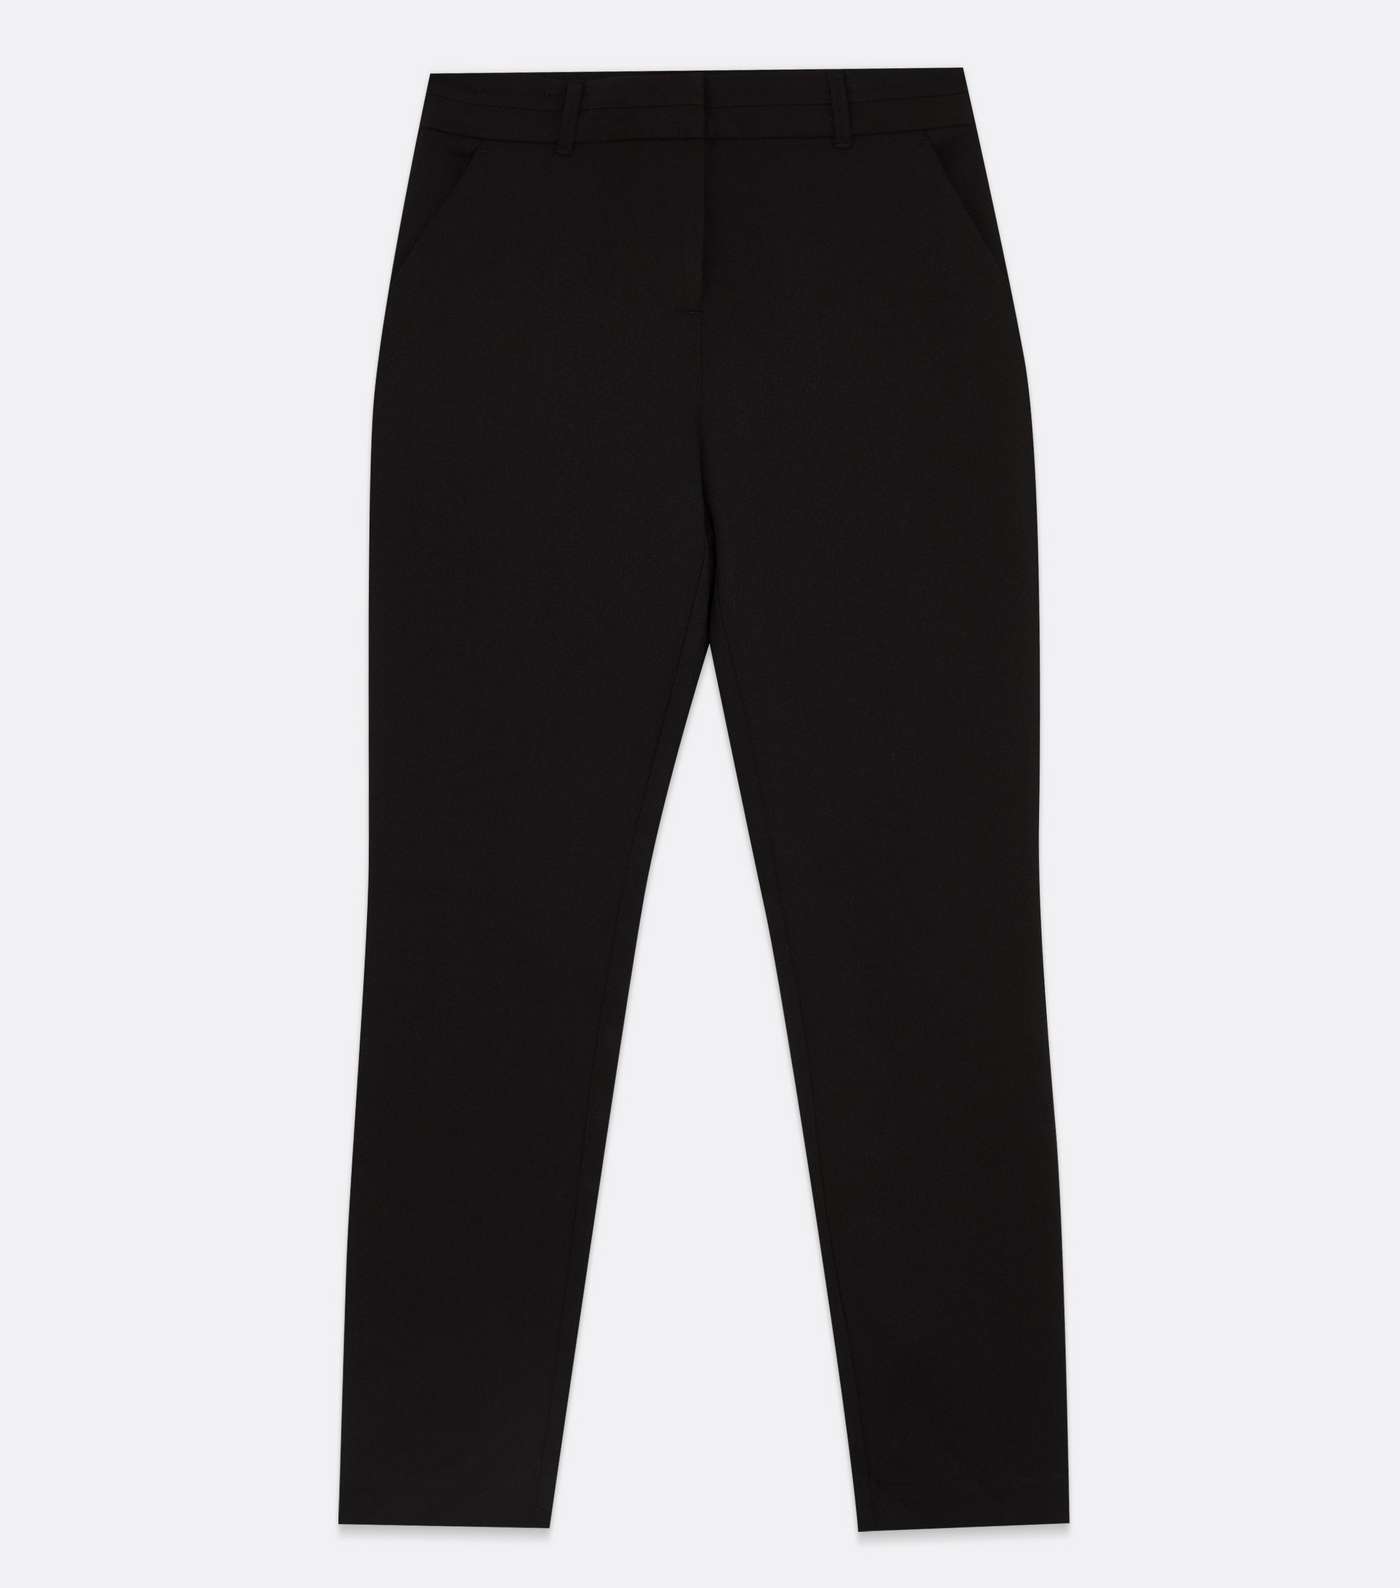 Petite Black Stretch Trousers Image 6